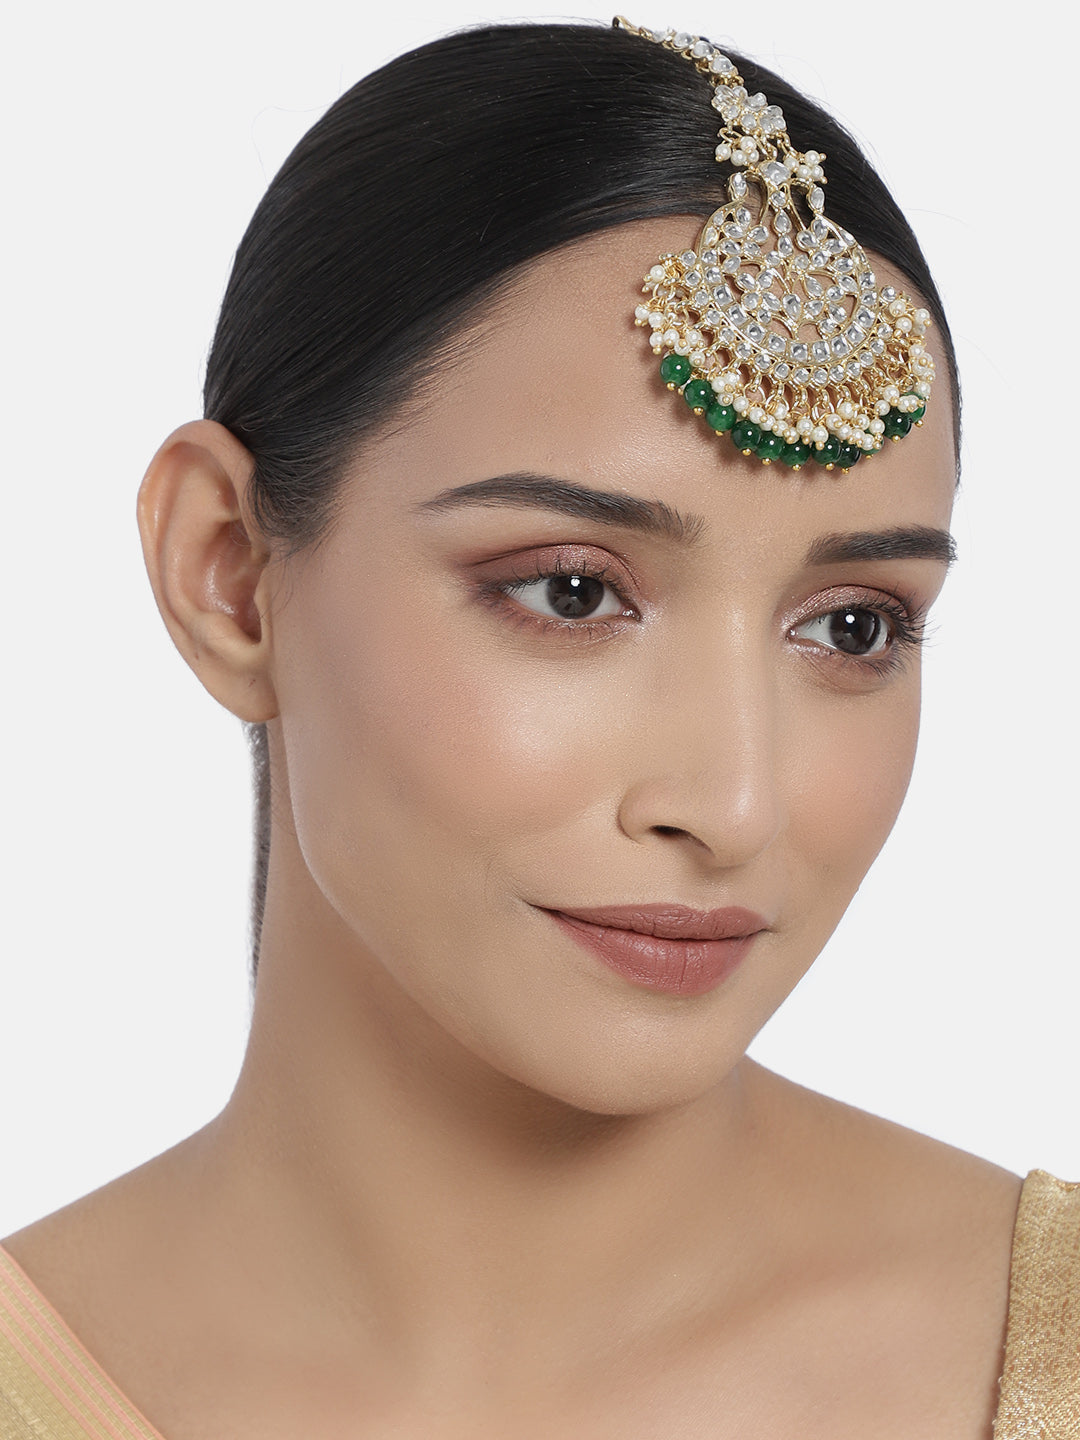 Women's Traditional Gold Plated Kundan & Pearl Studded Maang Tikka - I Jewels